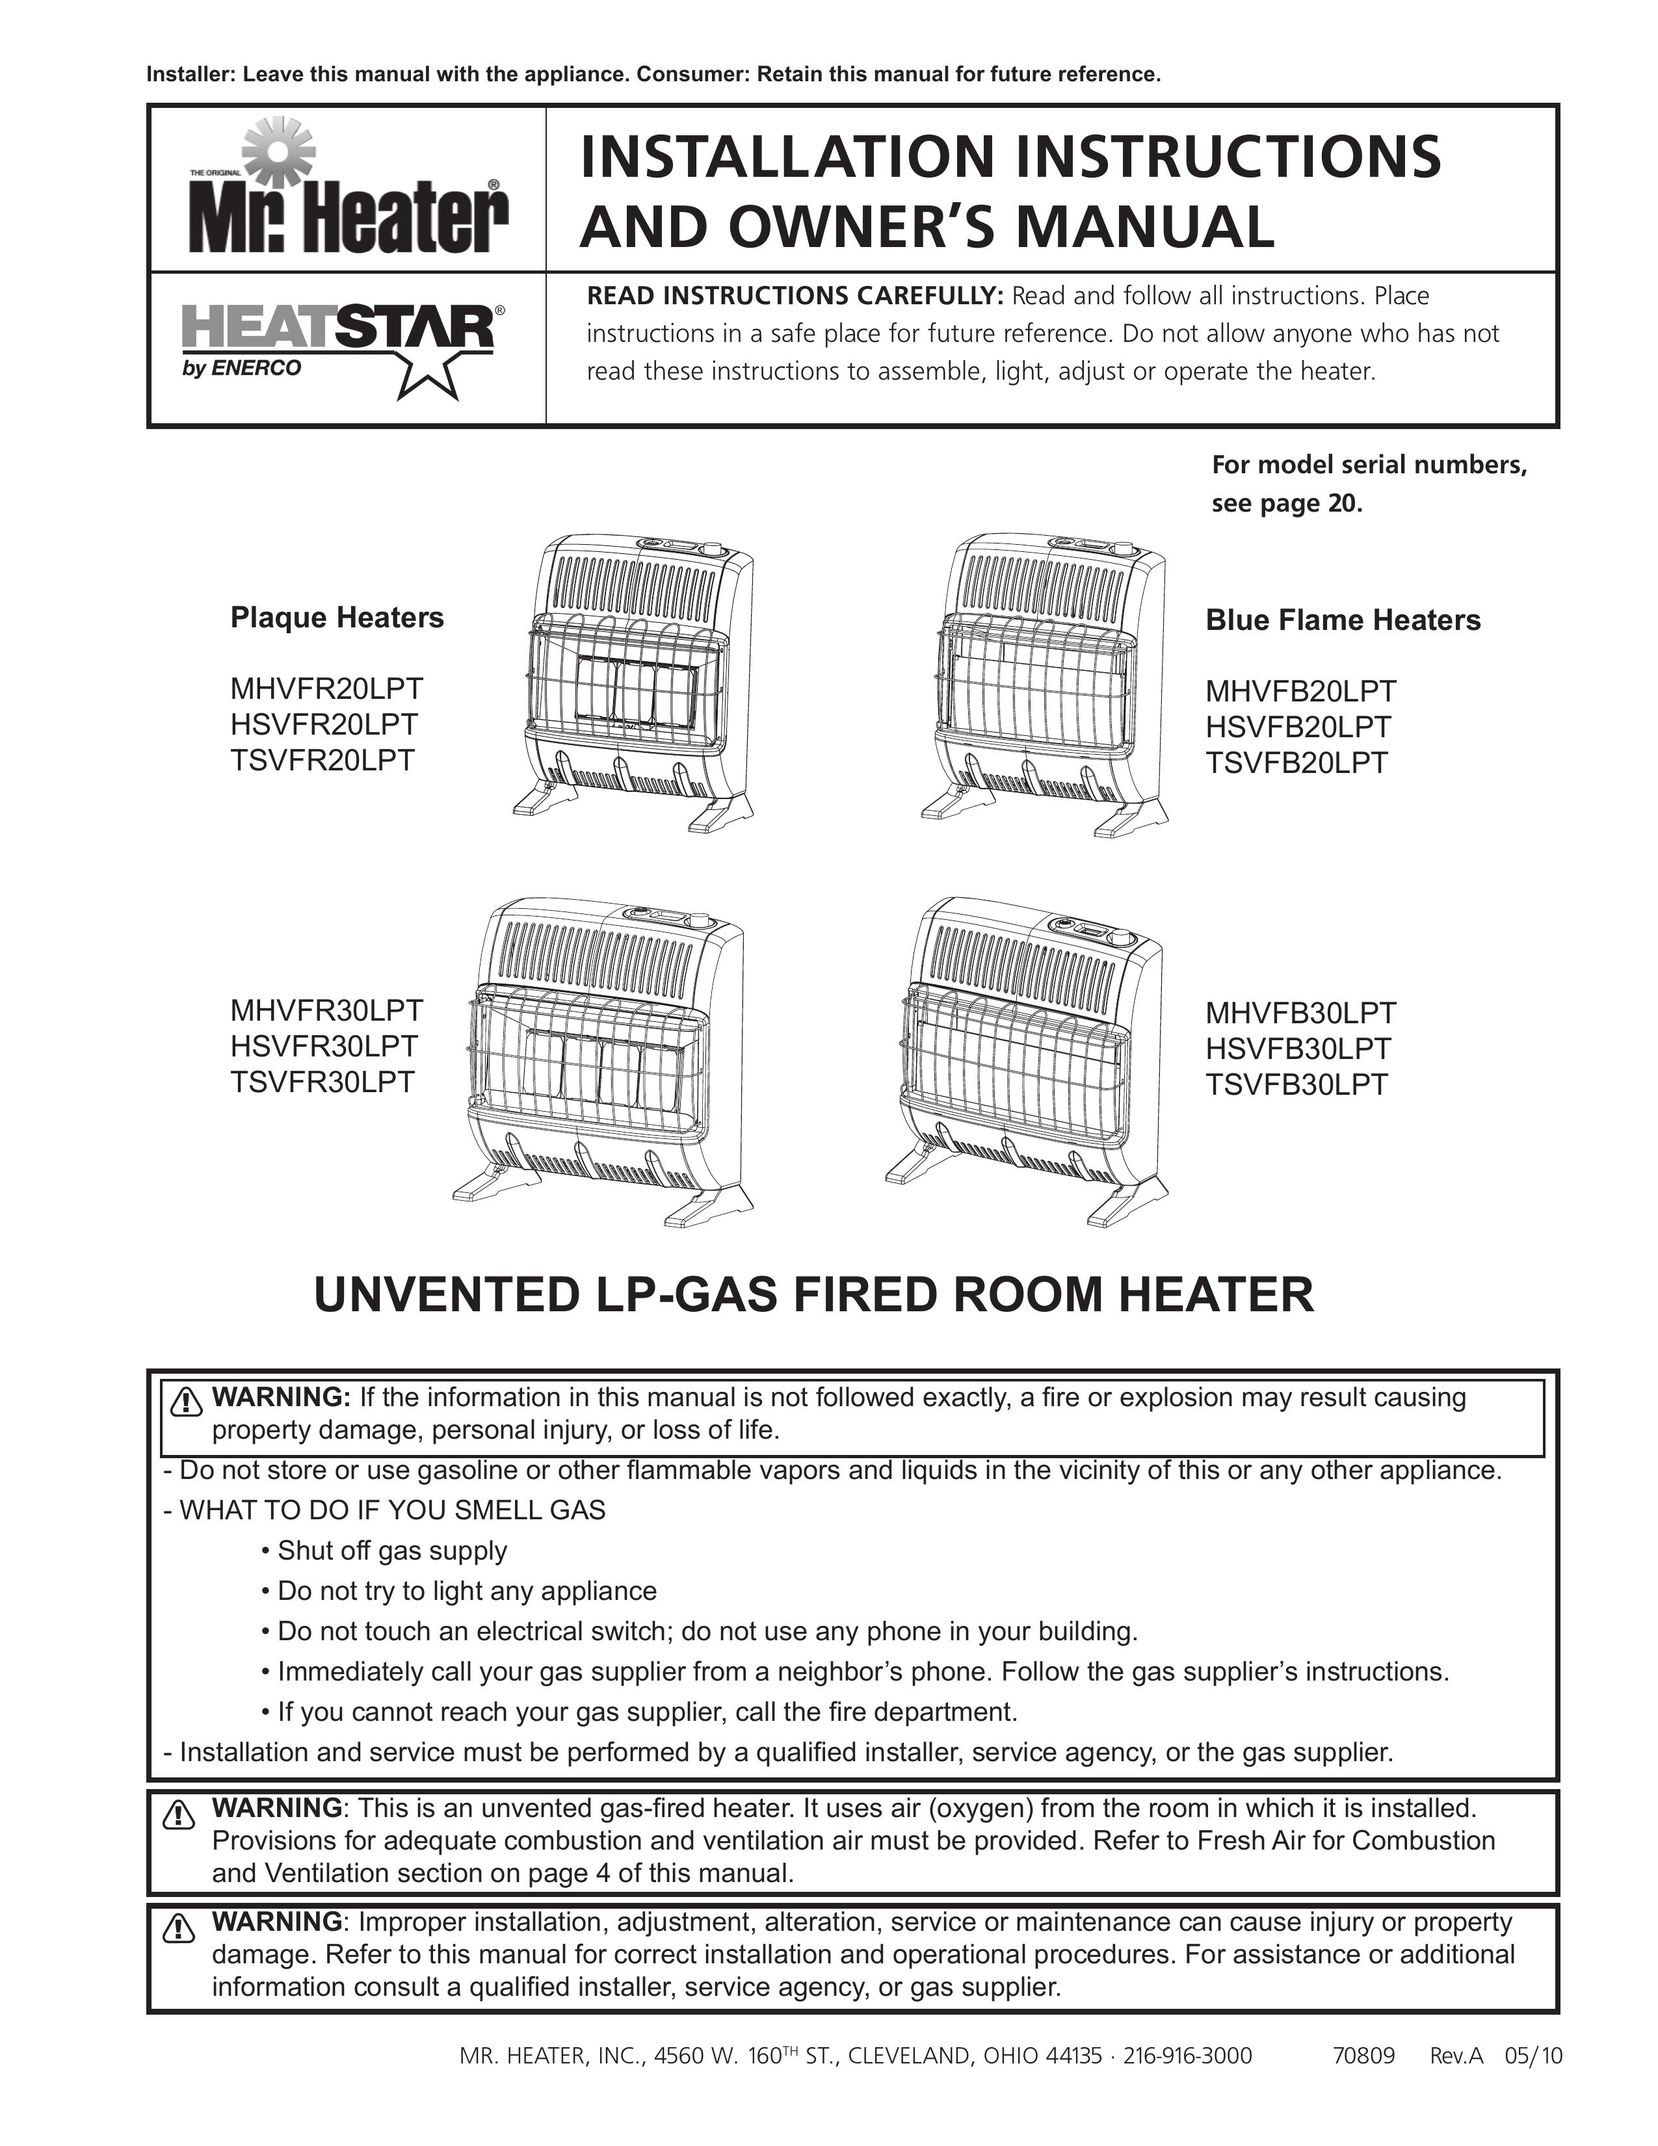 Enerco HSVFB30LPT Gas Heater User Manual